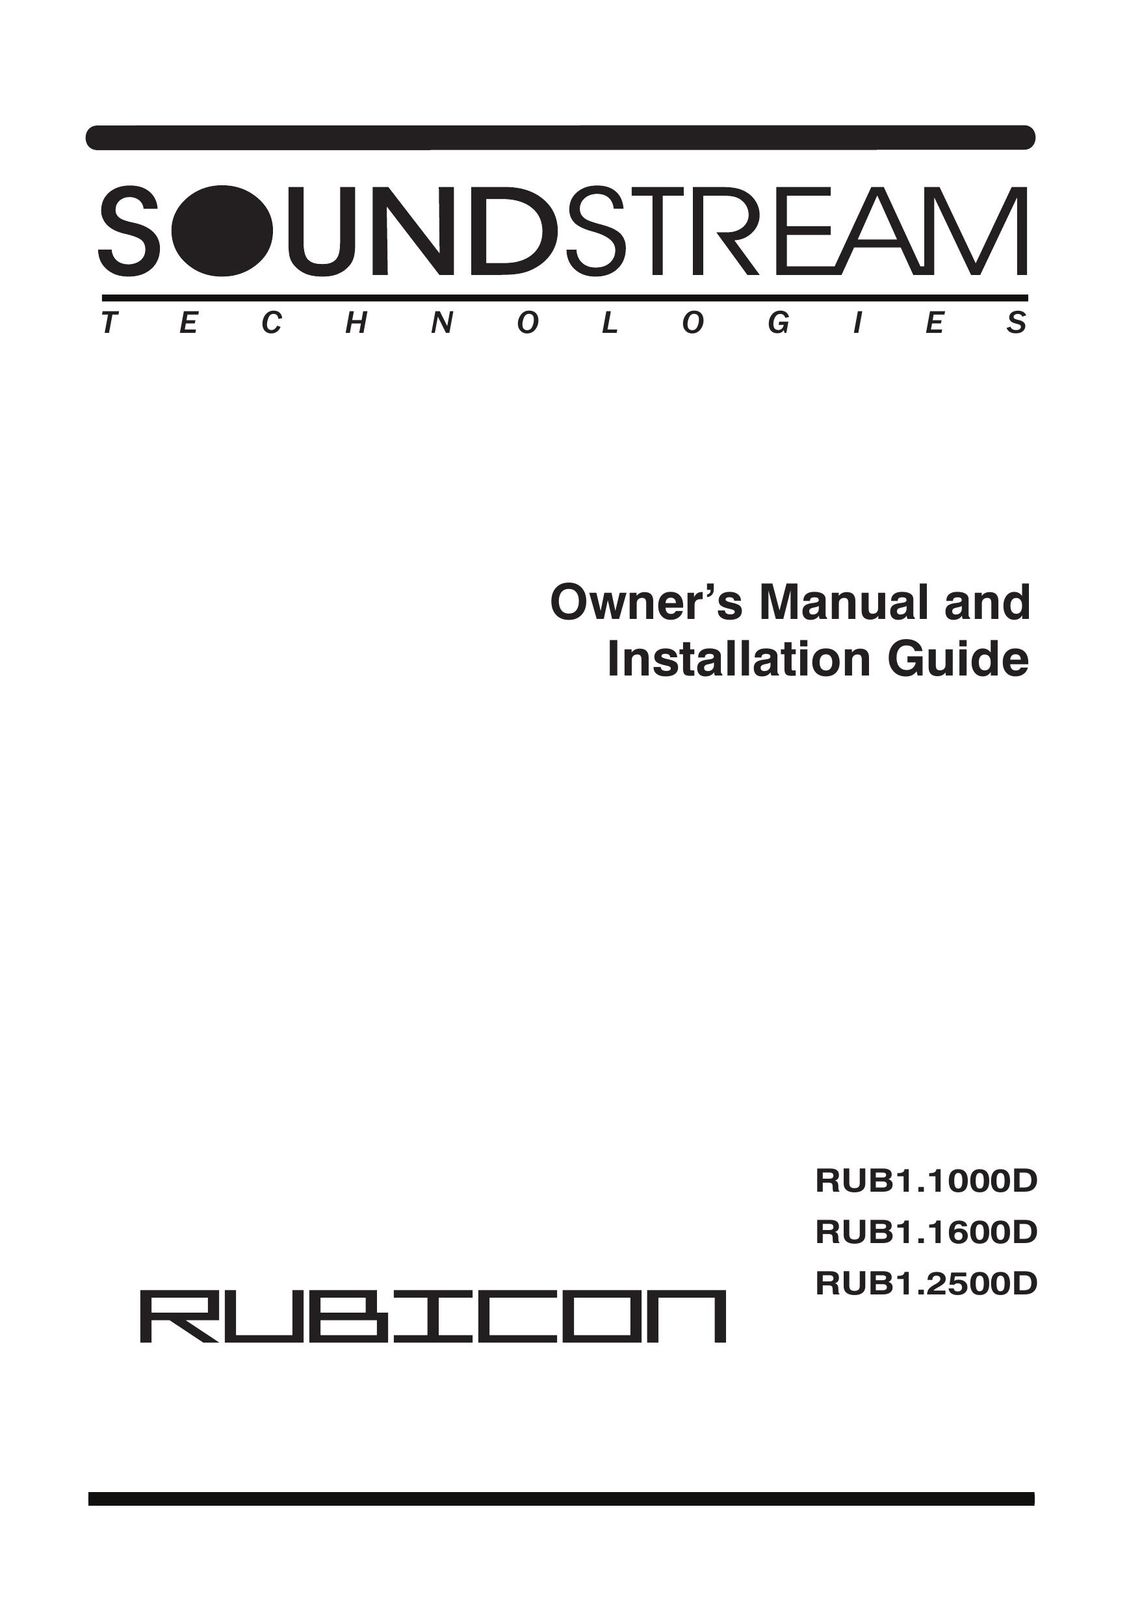 Soundstream Technologies RUB1.2500D Car Amplifier User Manual